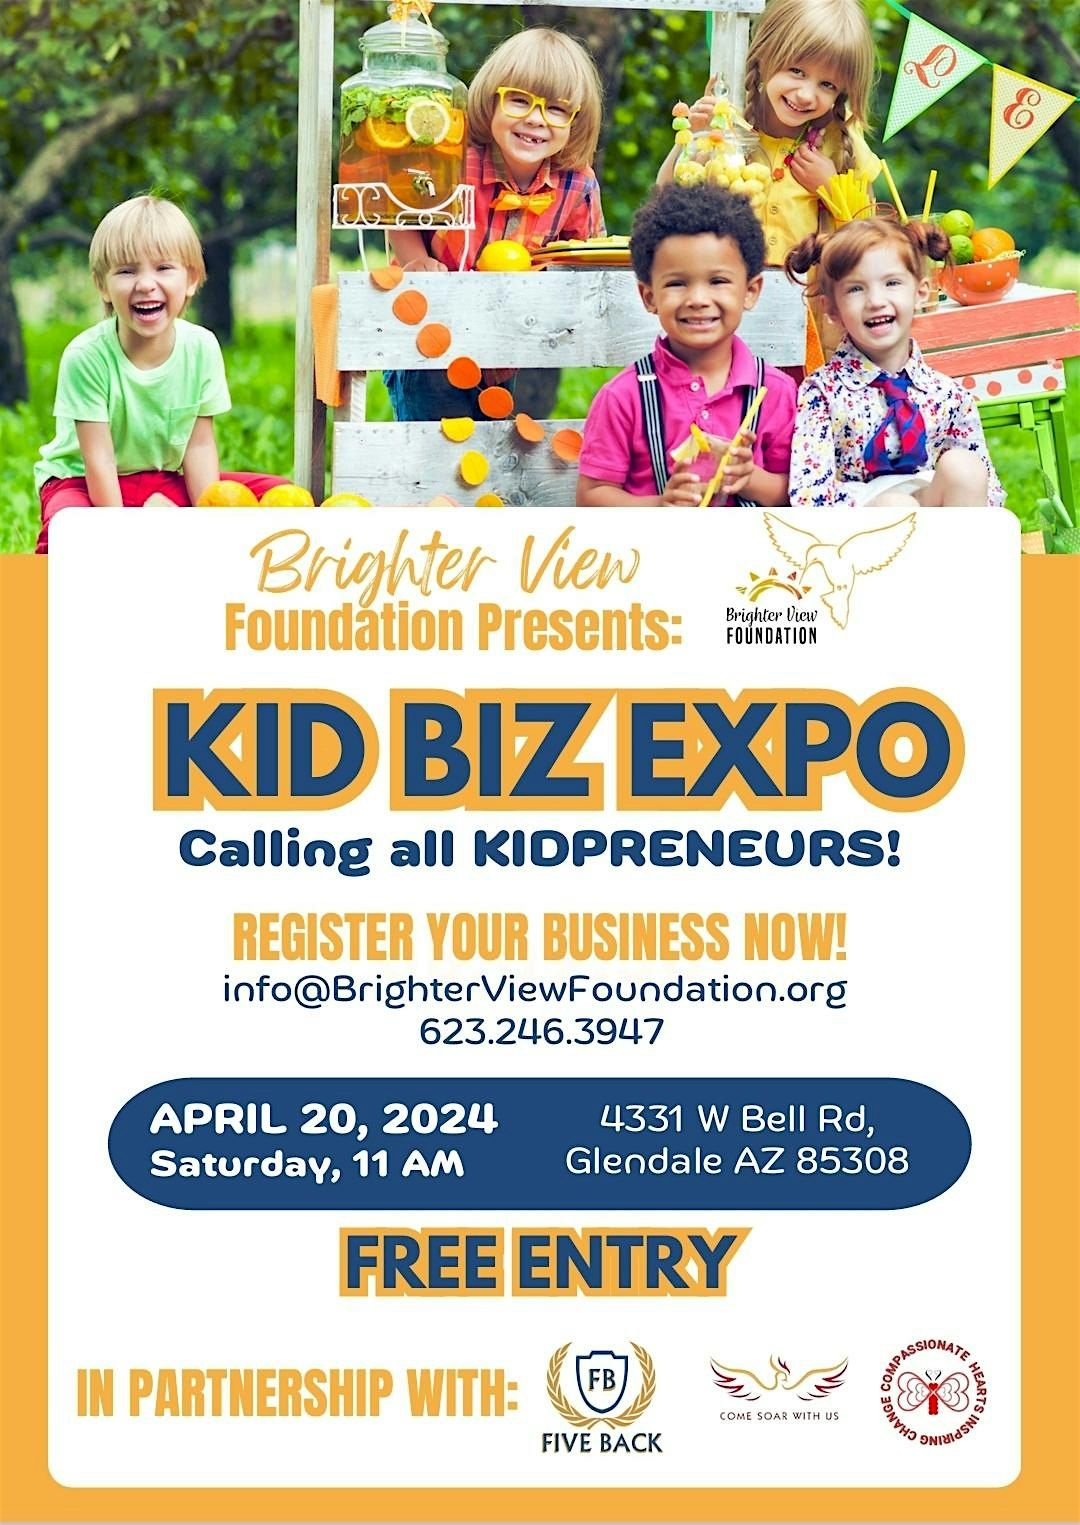 Young Entrepreneurs Unite: Kid Biz Expo Showcasing Youth Creativity